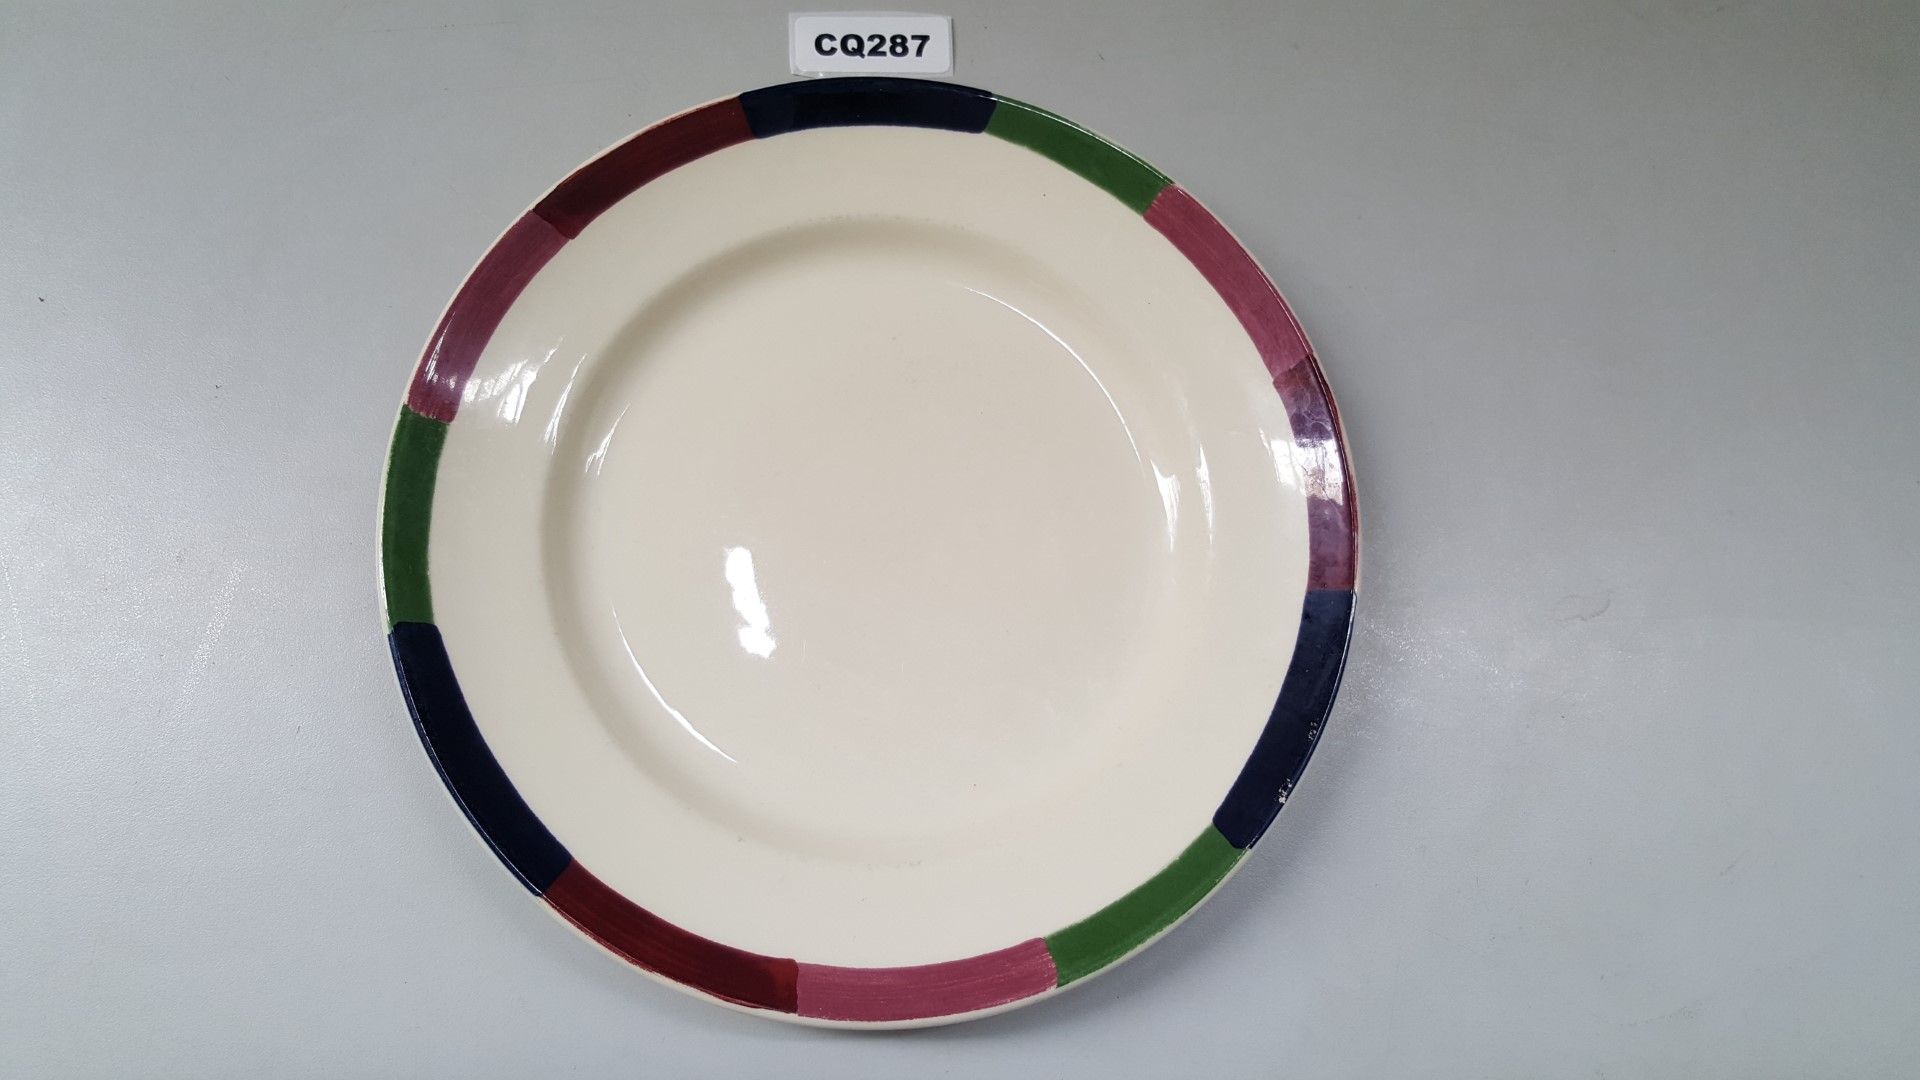 13 x Steelite Harmony Plates Cream With Pattered Egde 27CM - Ref CQ287 - Image 4 of 5